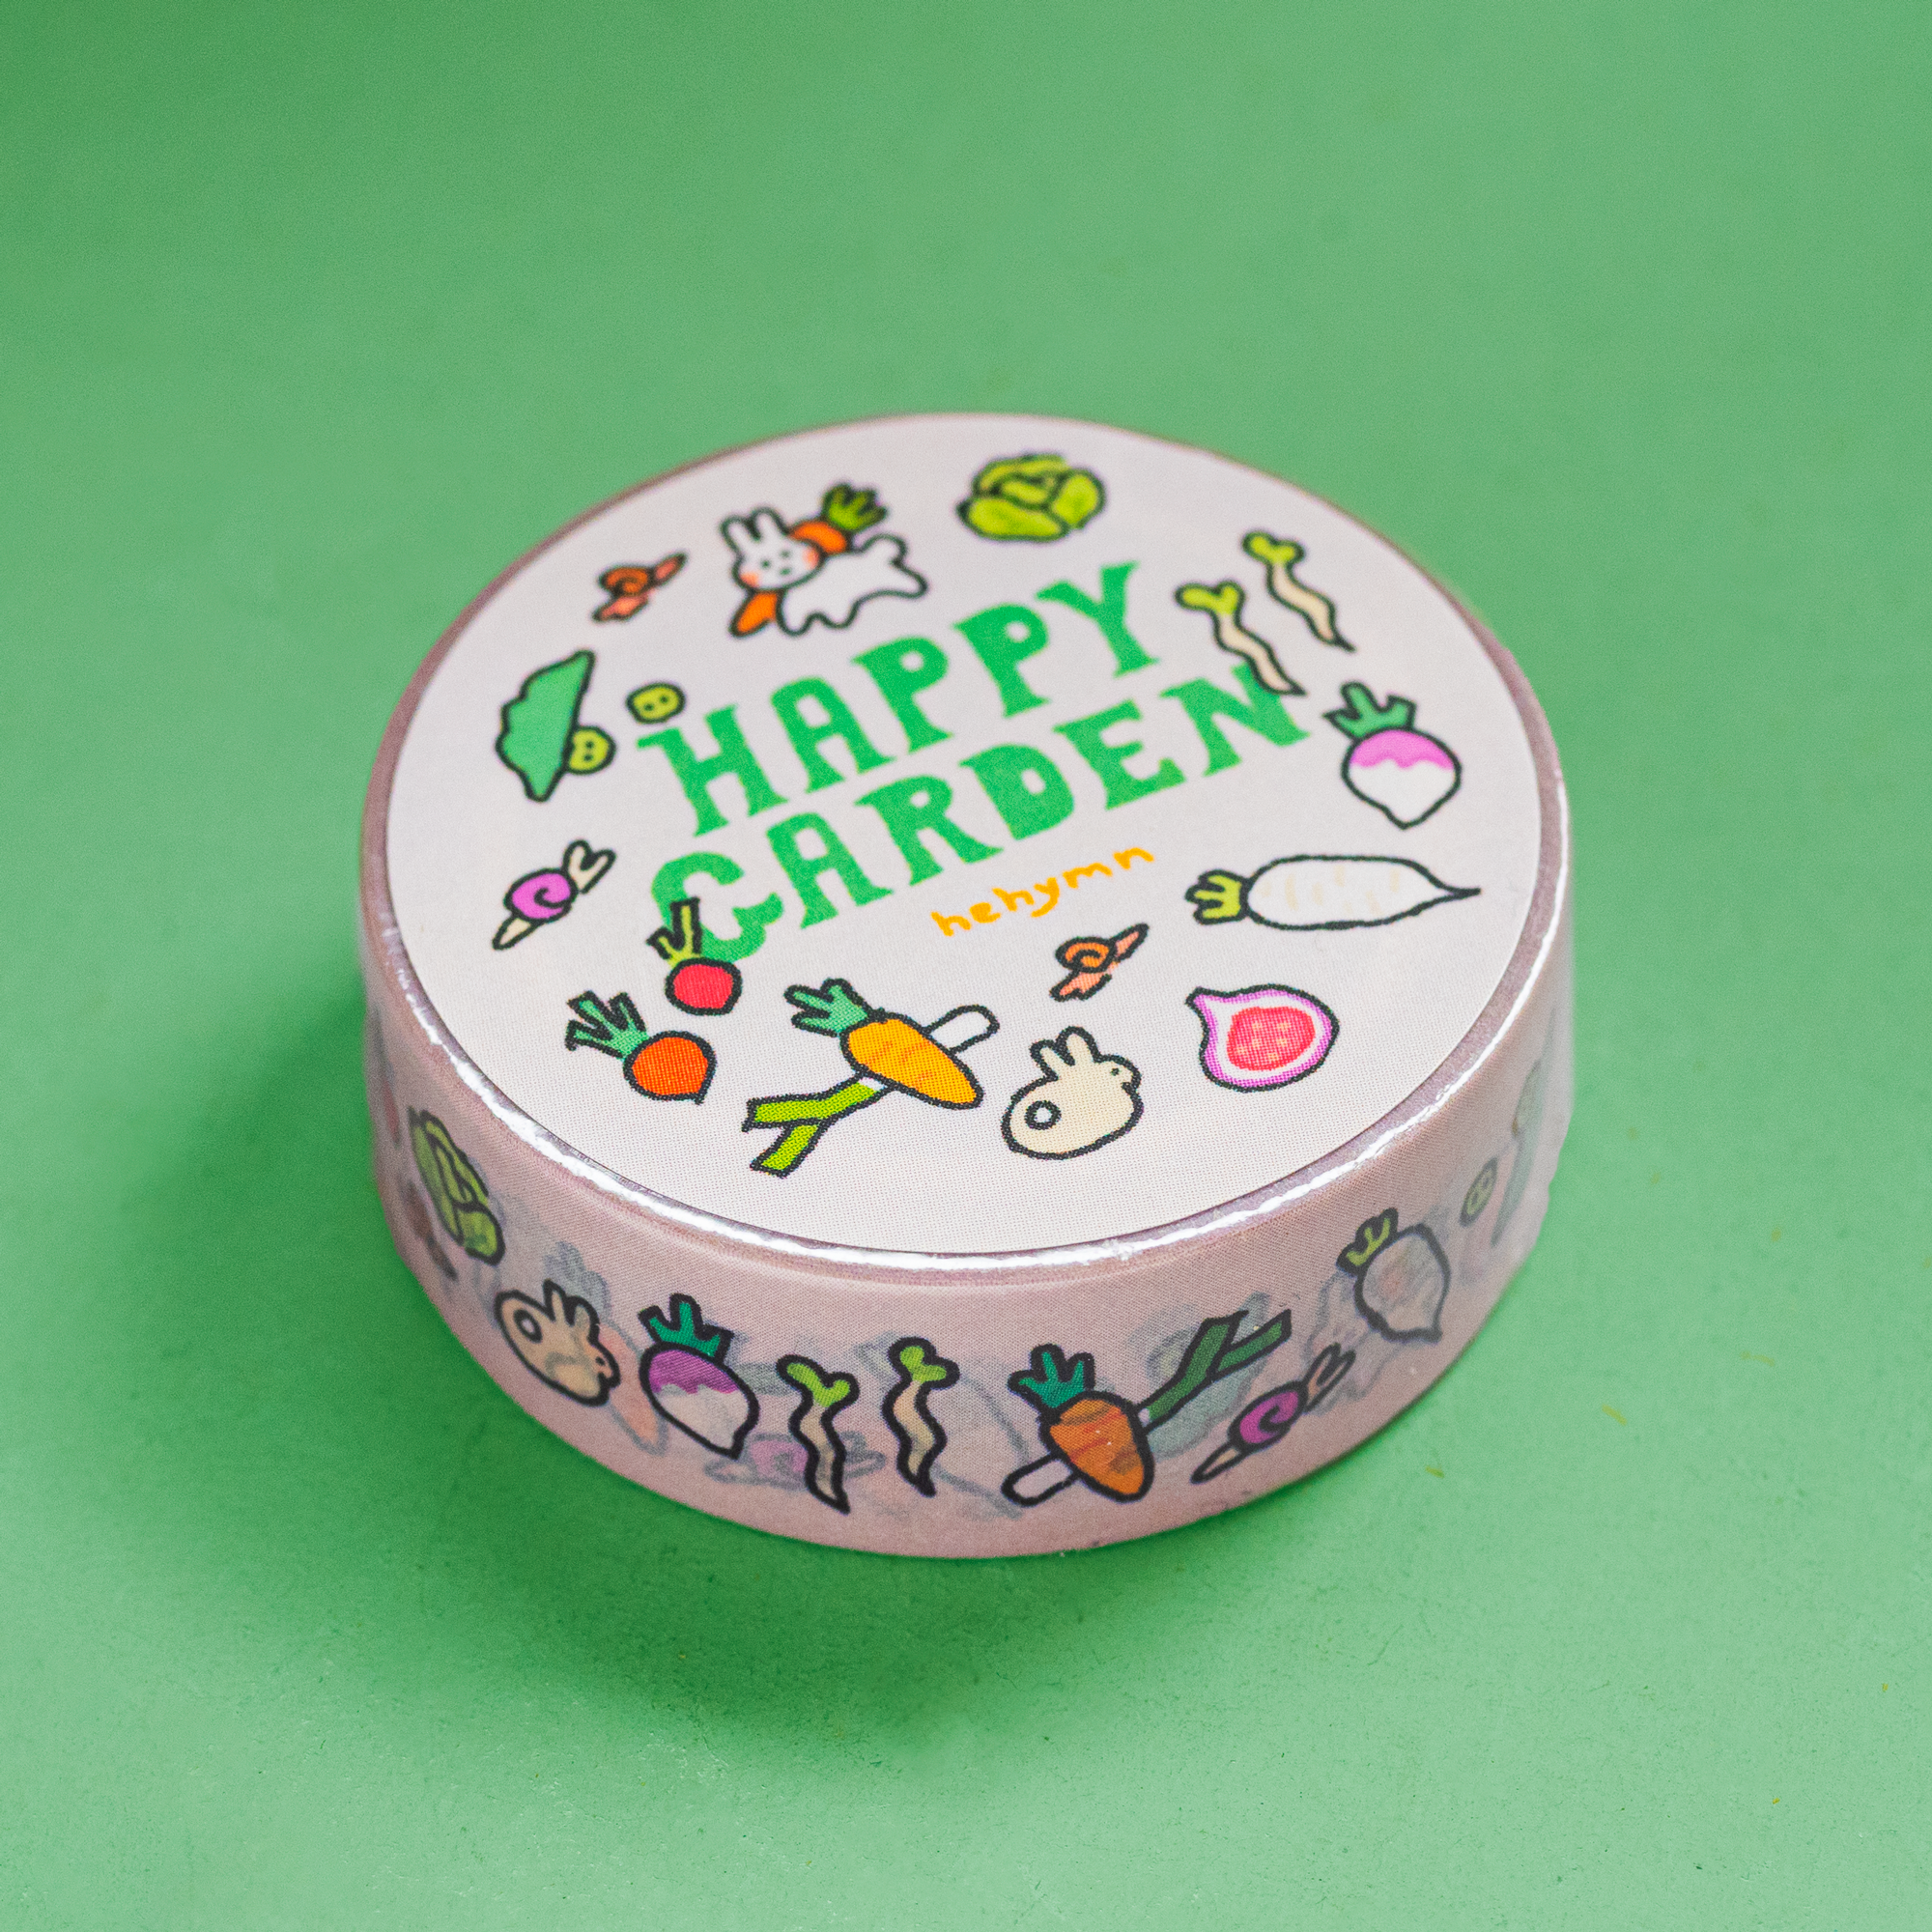 Happy Garden Washi Tape